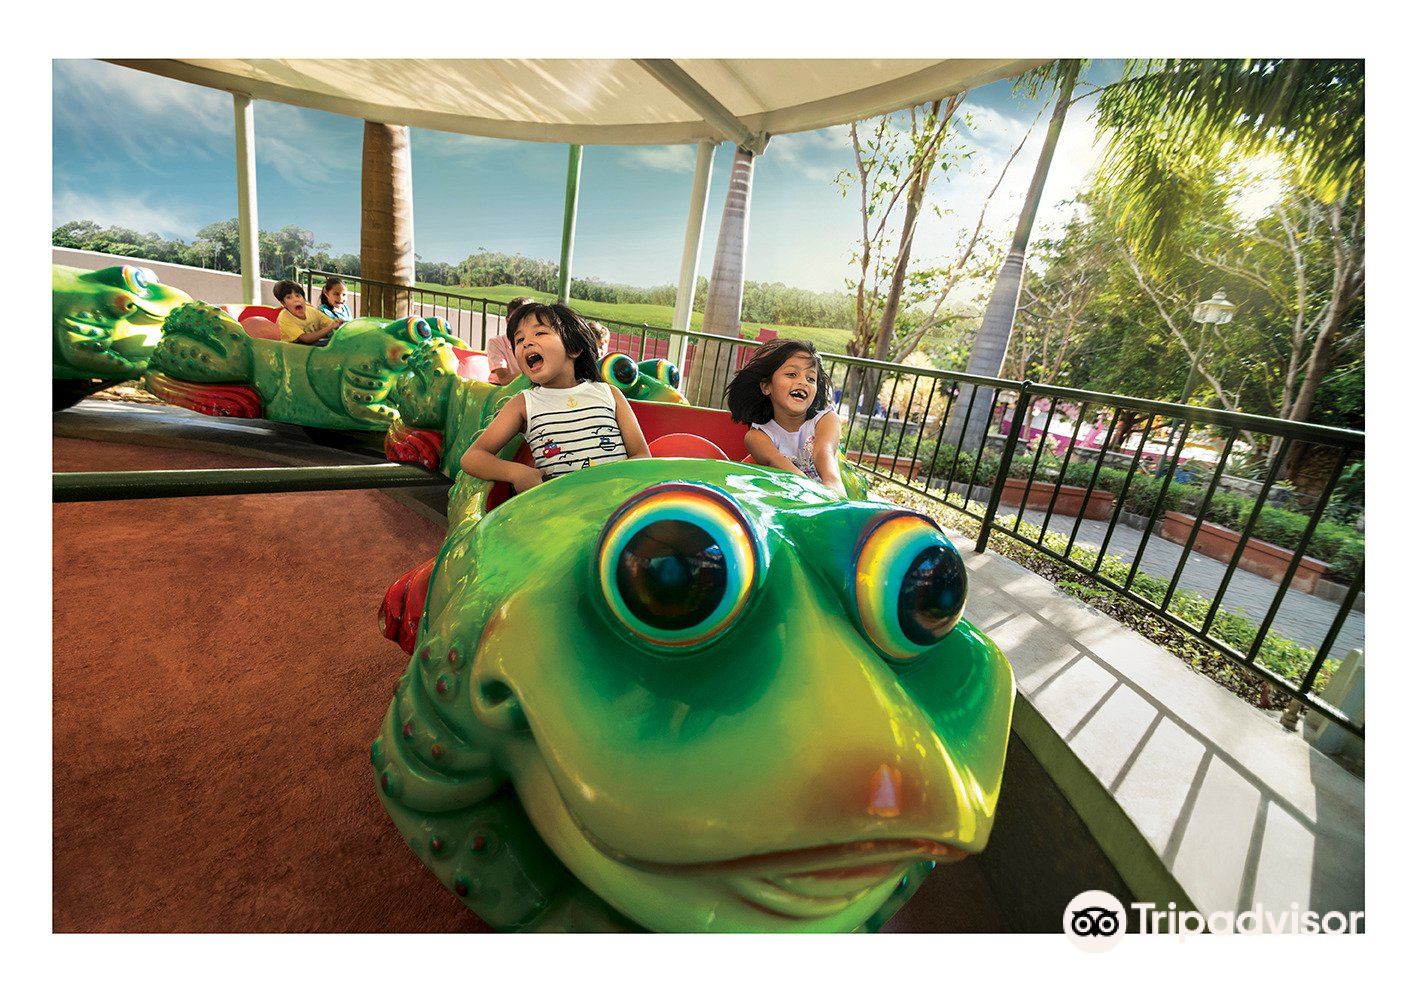 Thrilling Rides and Fun at Wonderla Amusement Park in Hyderabad!